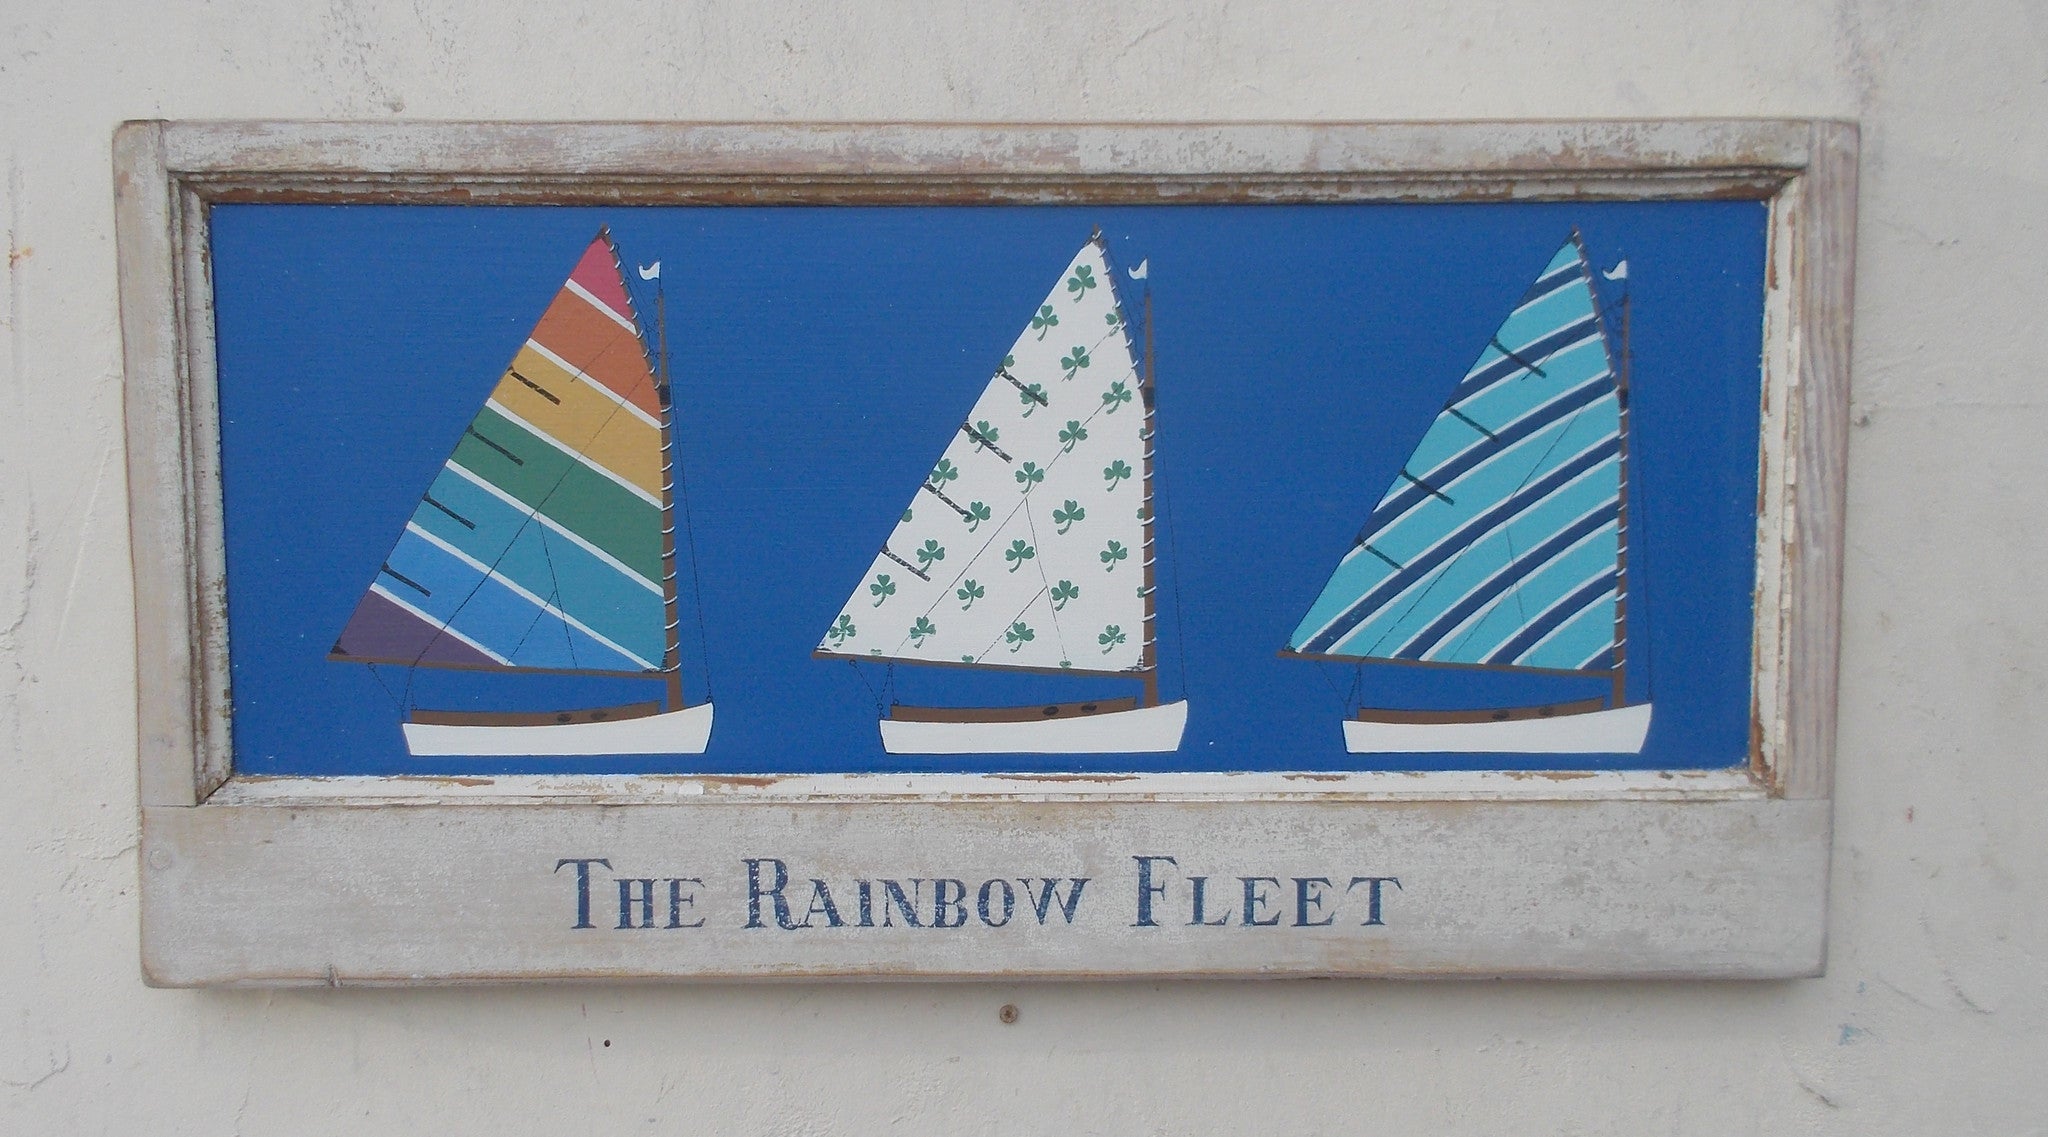 Rainbow Fleet in old frame